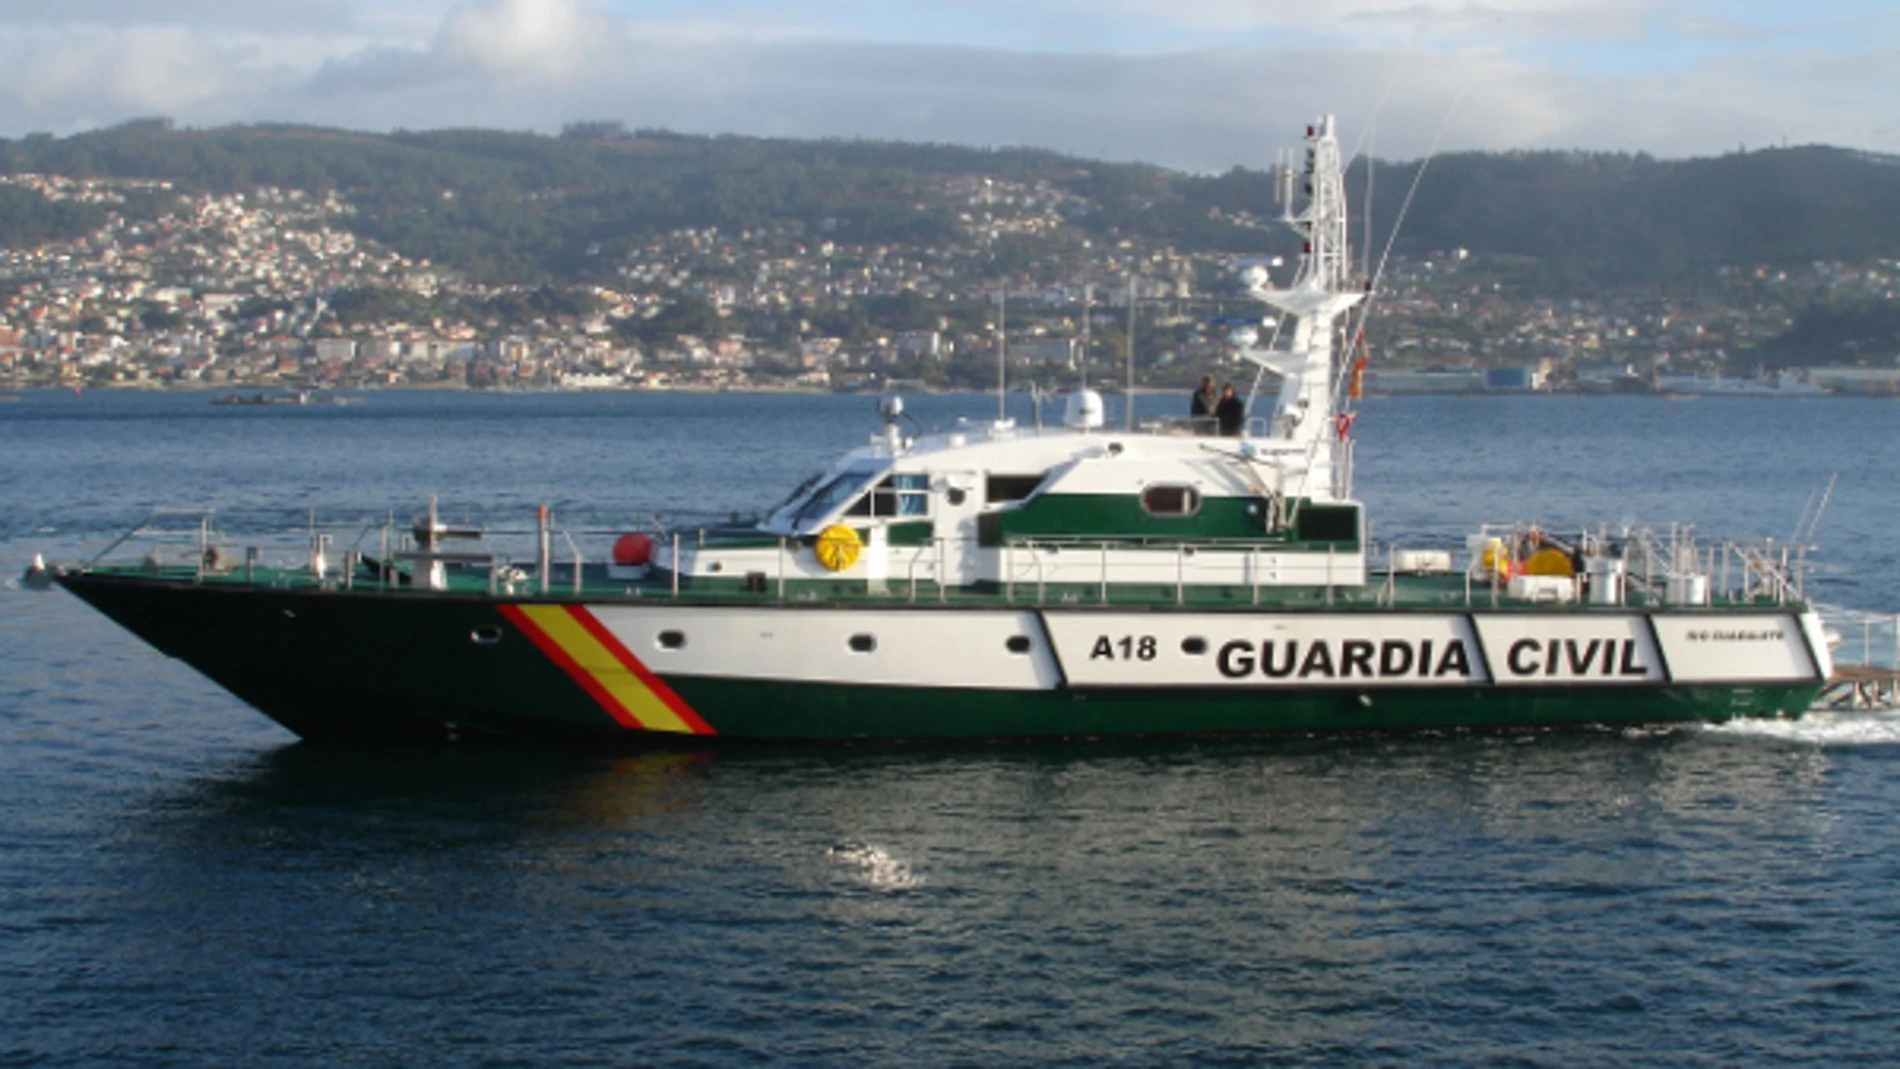 Imagen de la patrullera "Guadalete"de la Guardia Civil